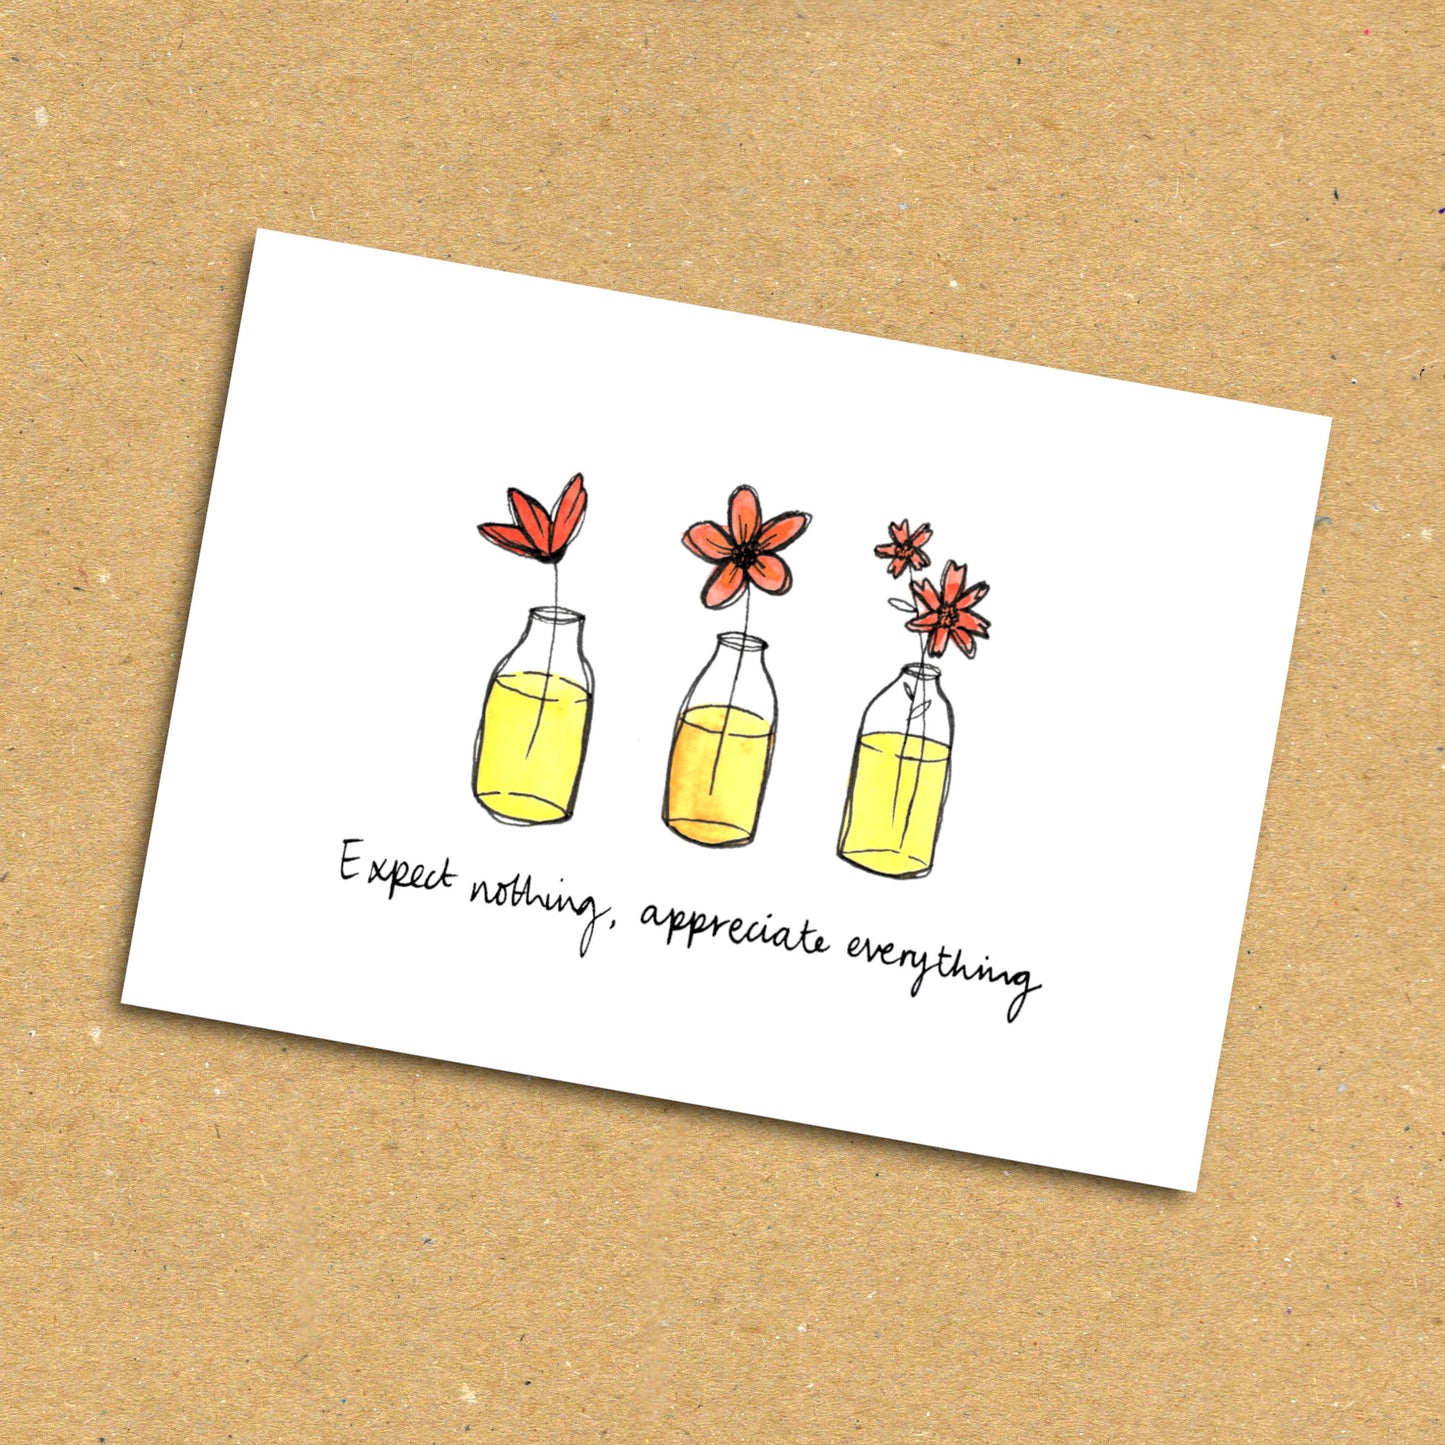 Flower Bottles "Appreciate Everything" Postcard x5 Pack